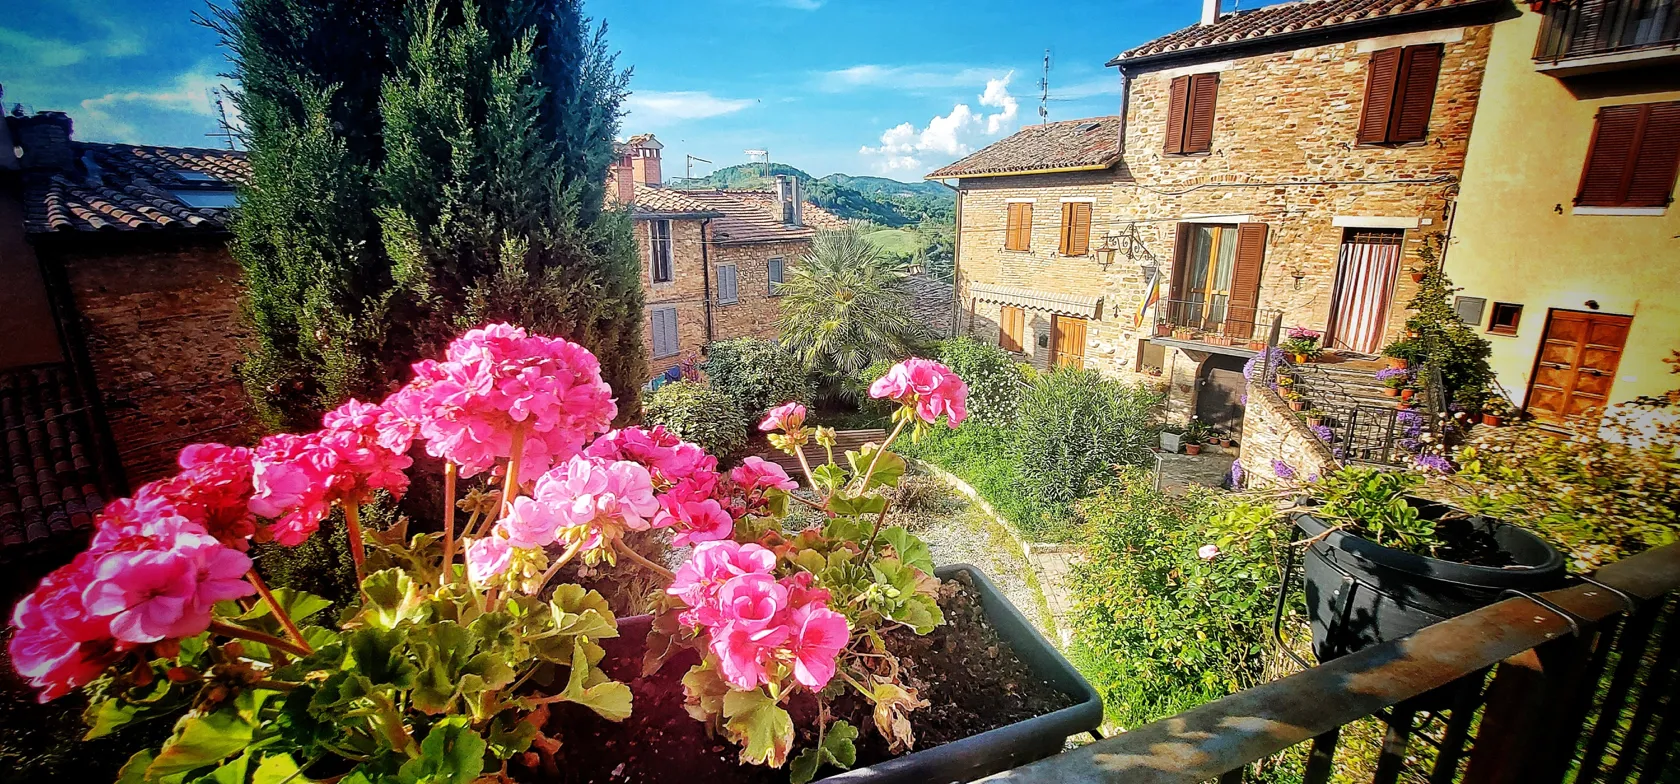 Stemningsbillede fra Montone, der er på listen over Italiens 100 smukkeste byer. Foto Lene Brøndum